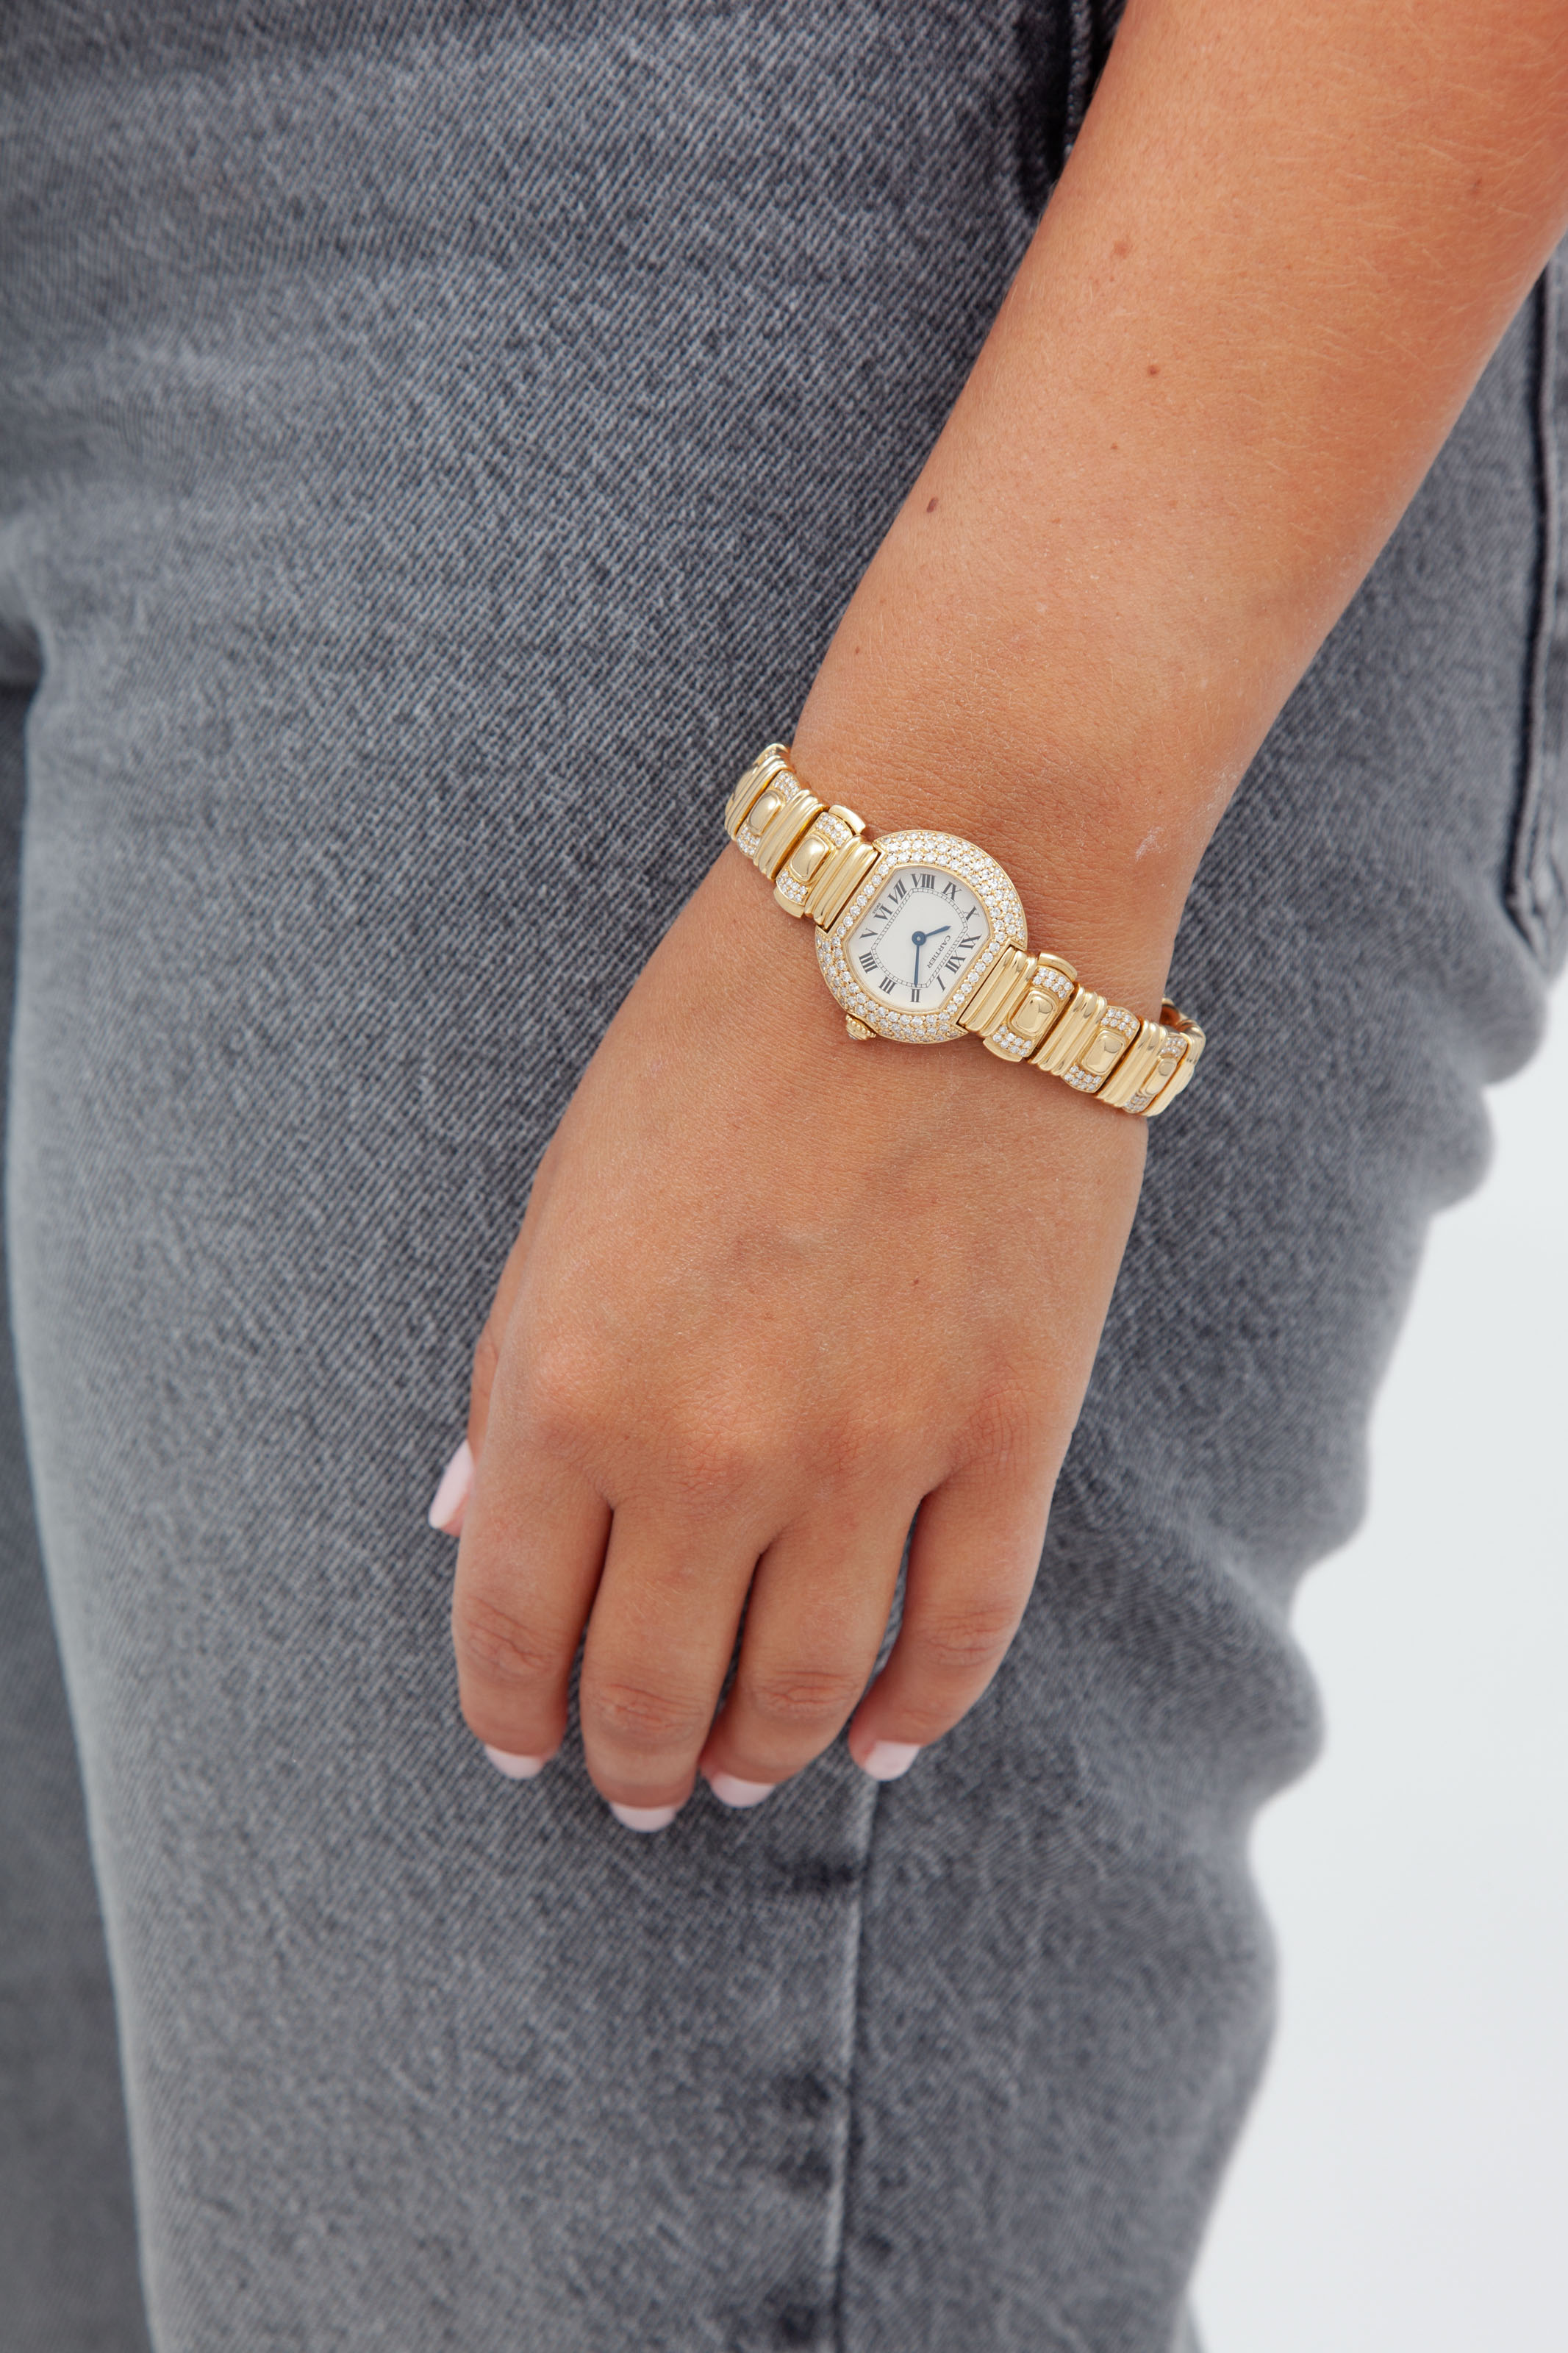 Cartier, Ellipse, montre-bracelet en or 750 sertie de diamants, transformable en bracelet - Image 6 of 6